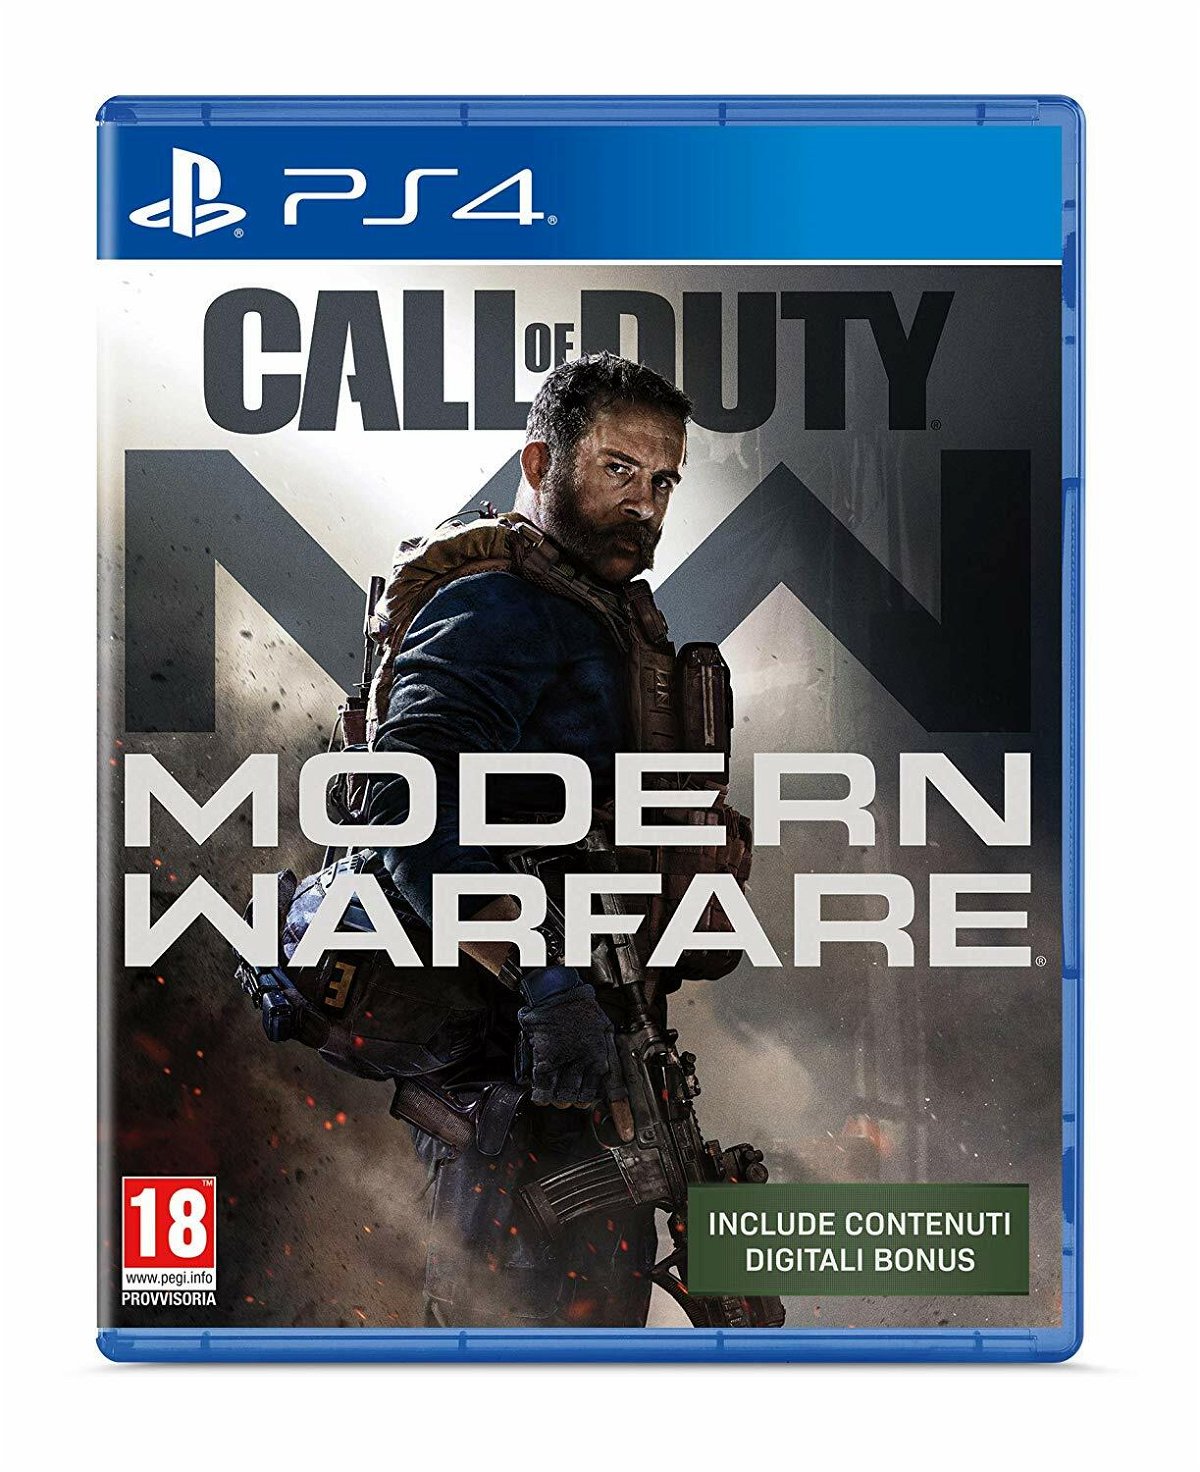 La copertina di Call of Duty Modern Warfare (2019) per PlayStation 4